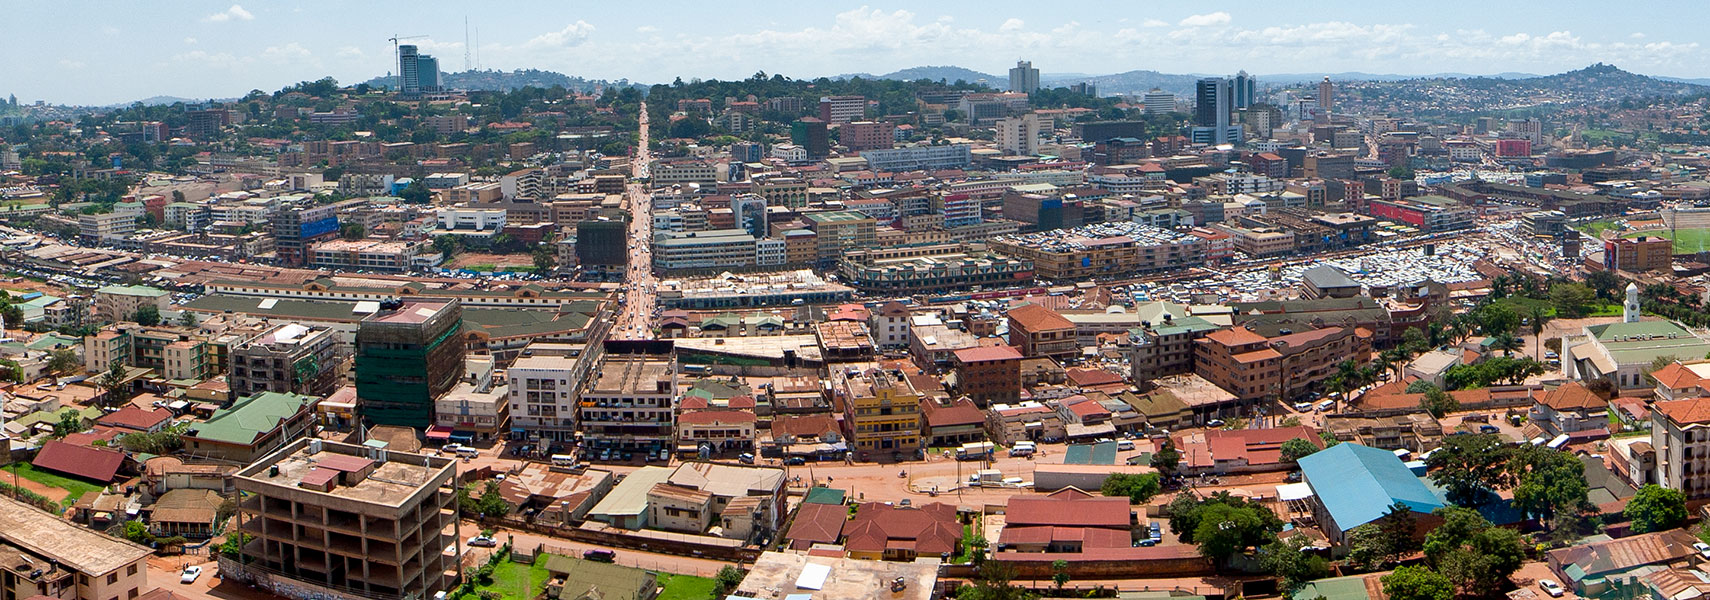 Panorama of Kampala,  Uganda's Capital City